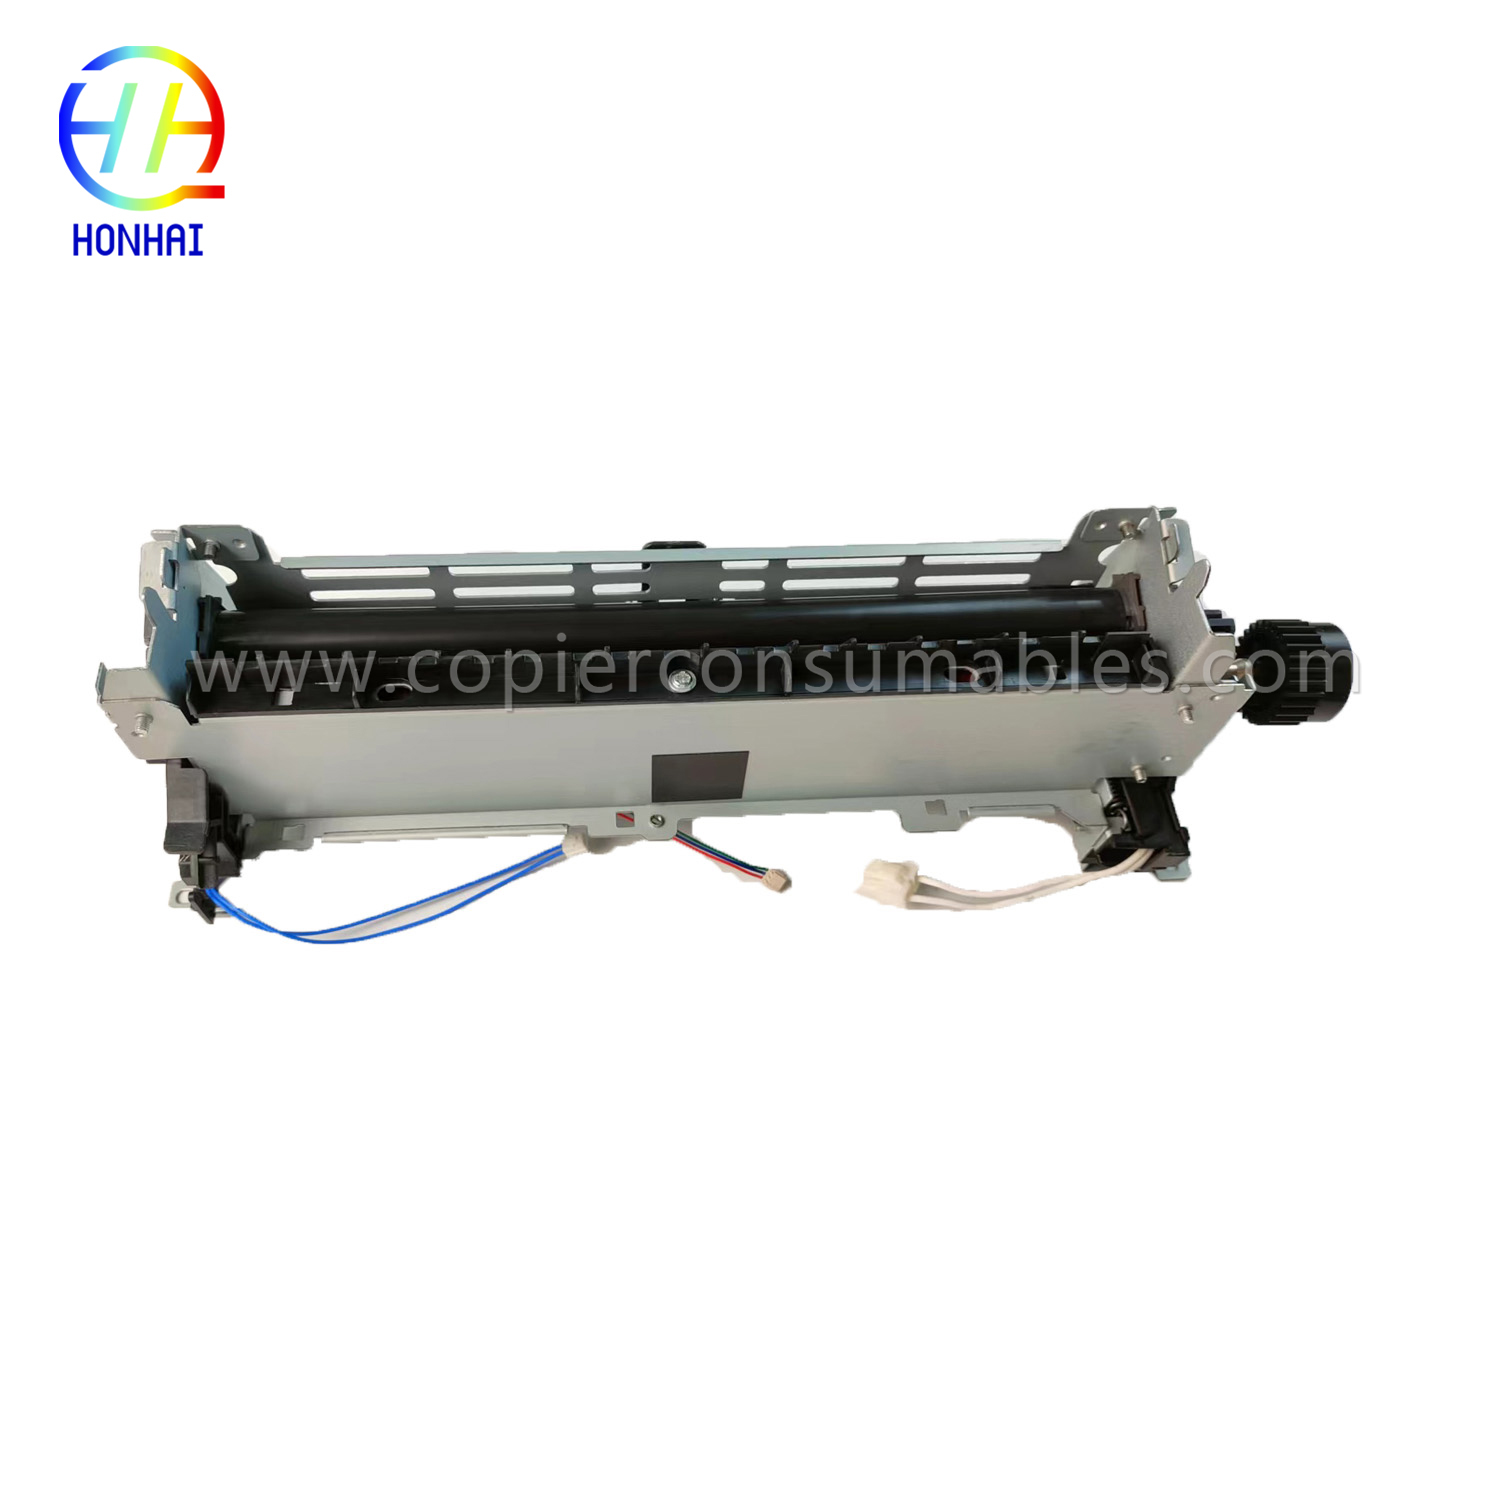 Unitate de fuziune Flim 220 V pentru imprimanta HP LaserJet Pro 400 M401 M401DN M425 RM1-8809 RM1-8809-000CN